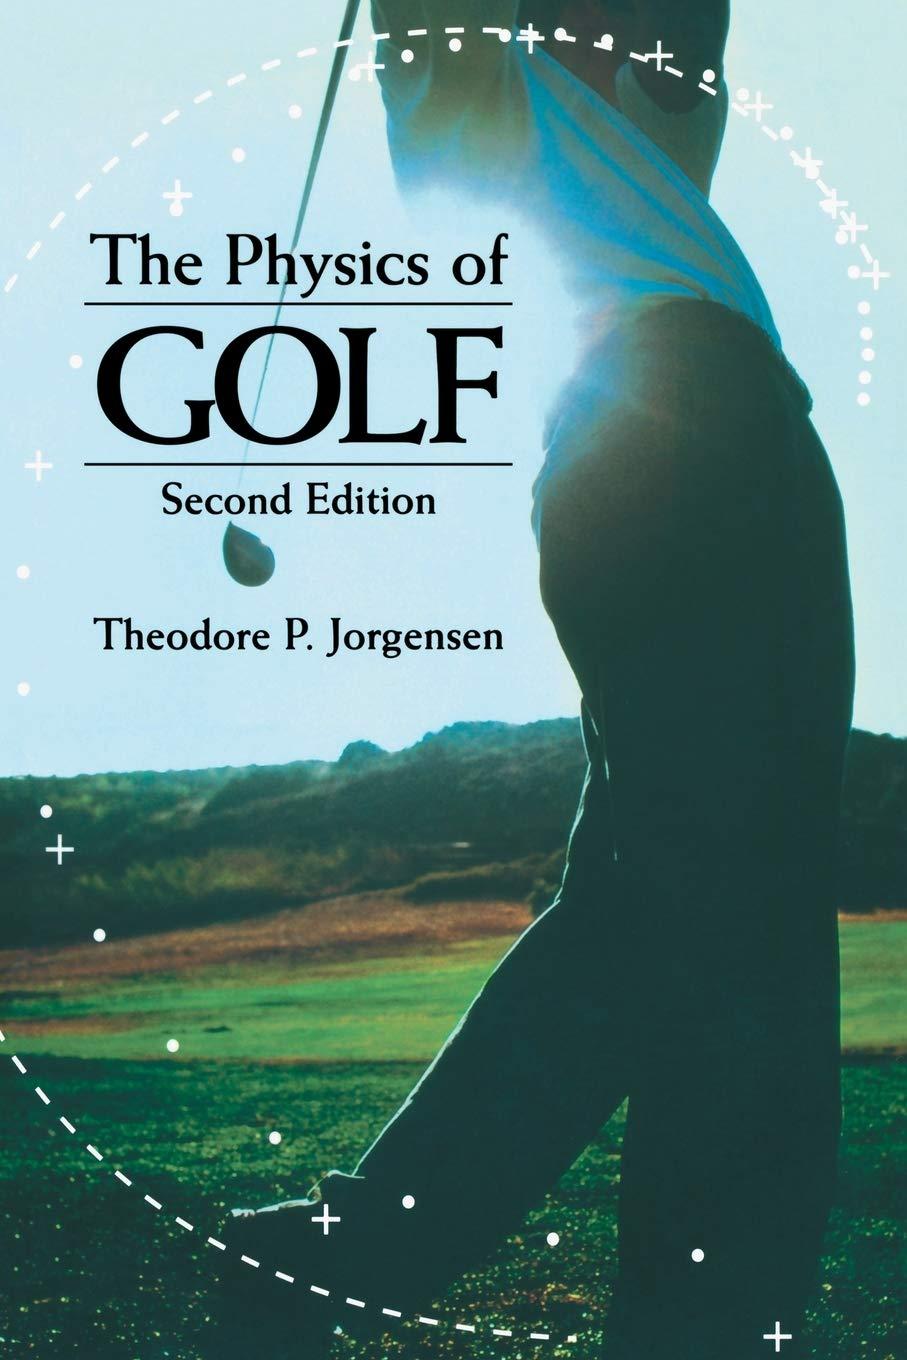 the physics of golf 2nd edition theodore p. jorgensen 038798691x, 978-0387986913